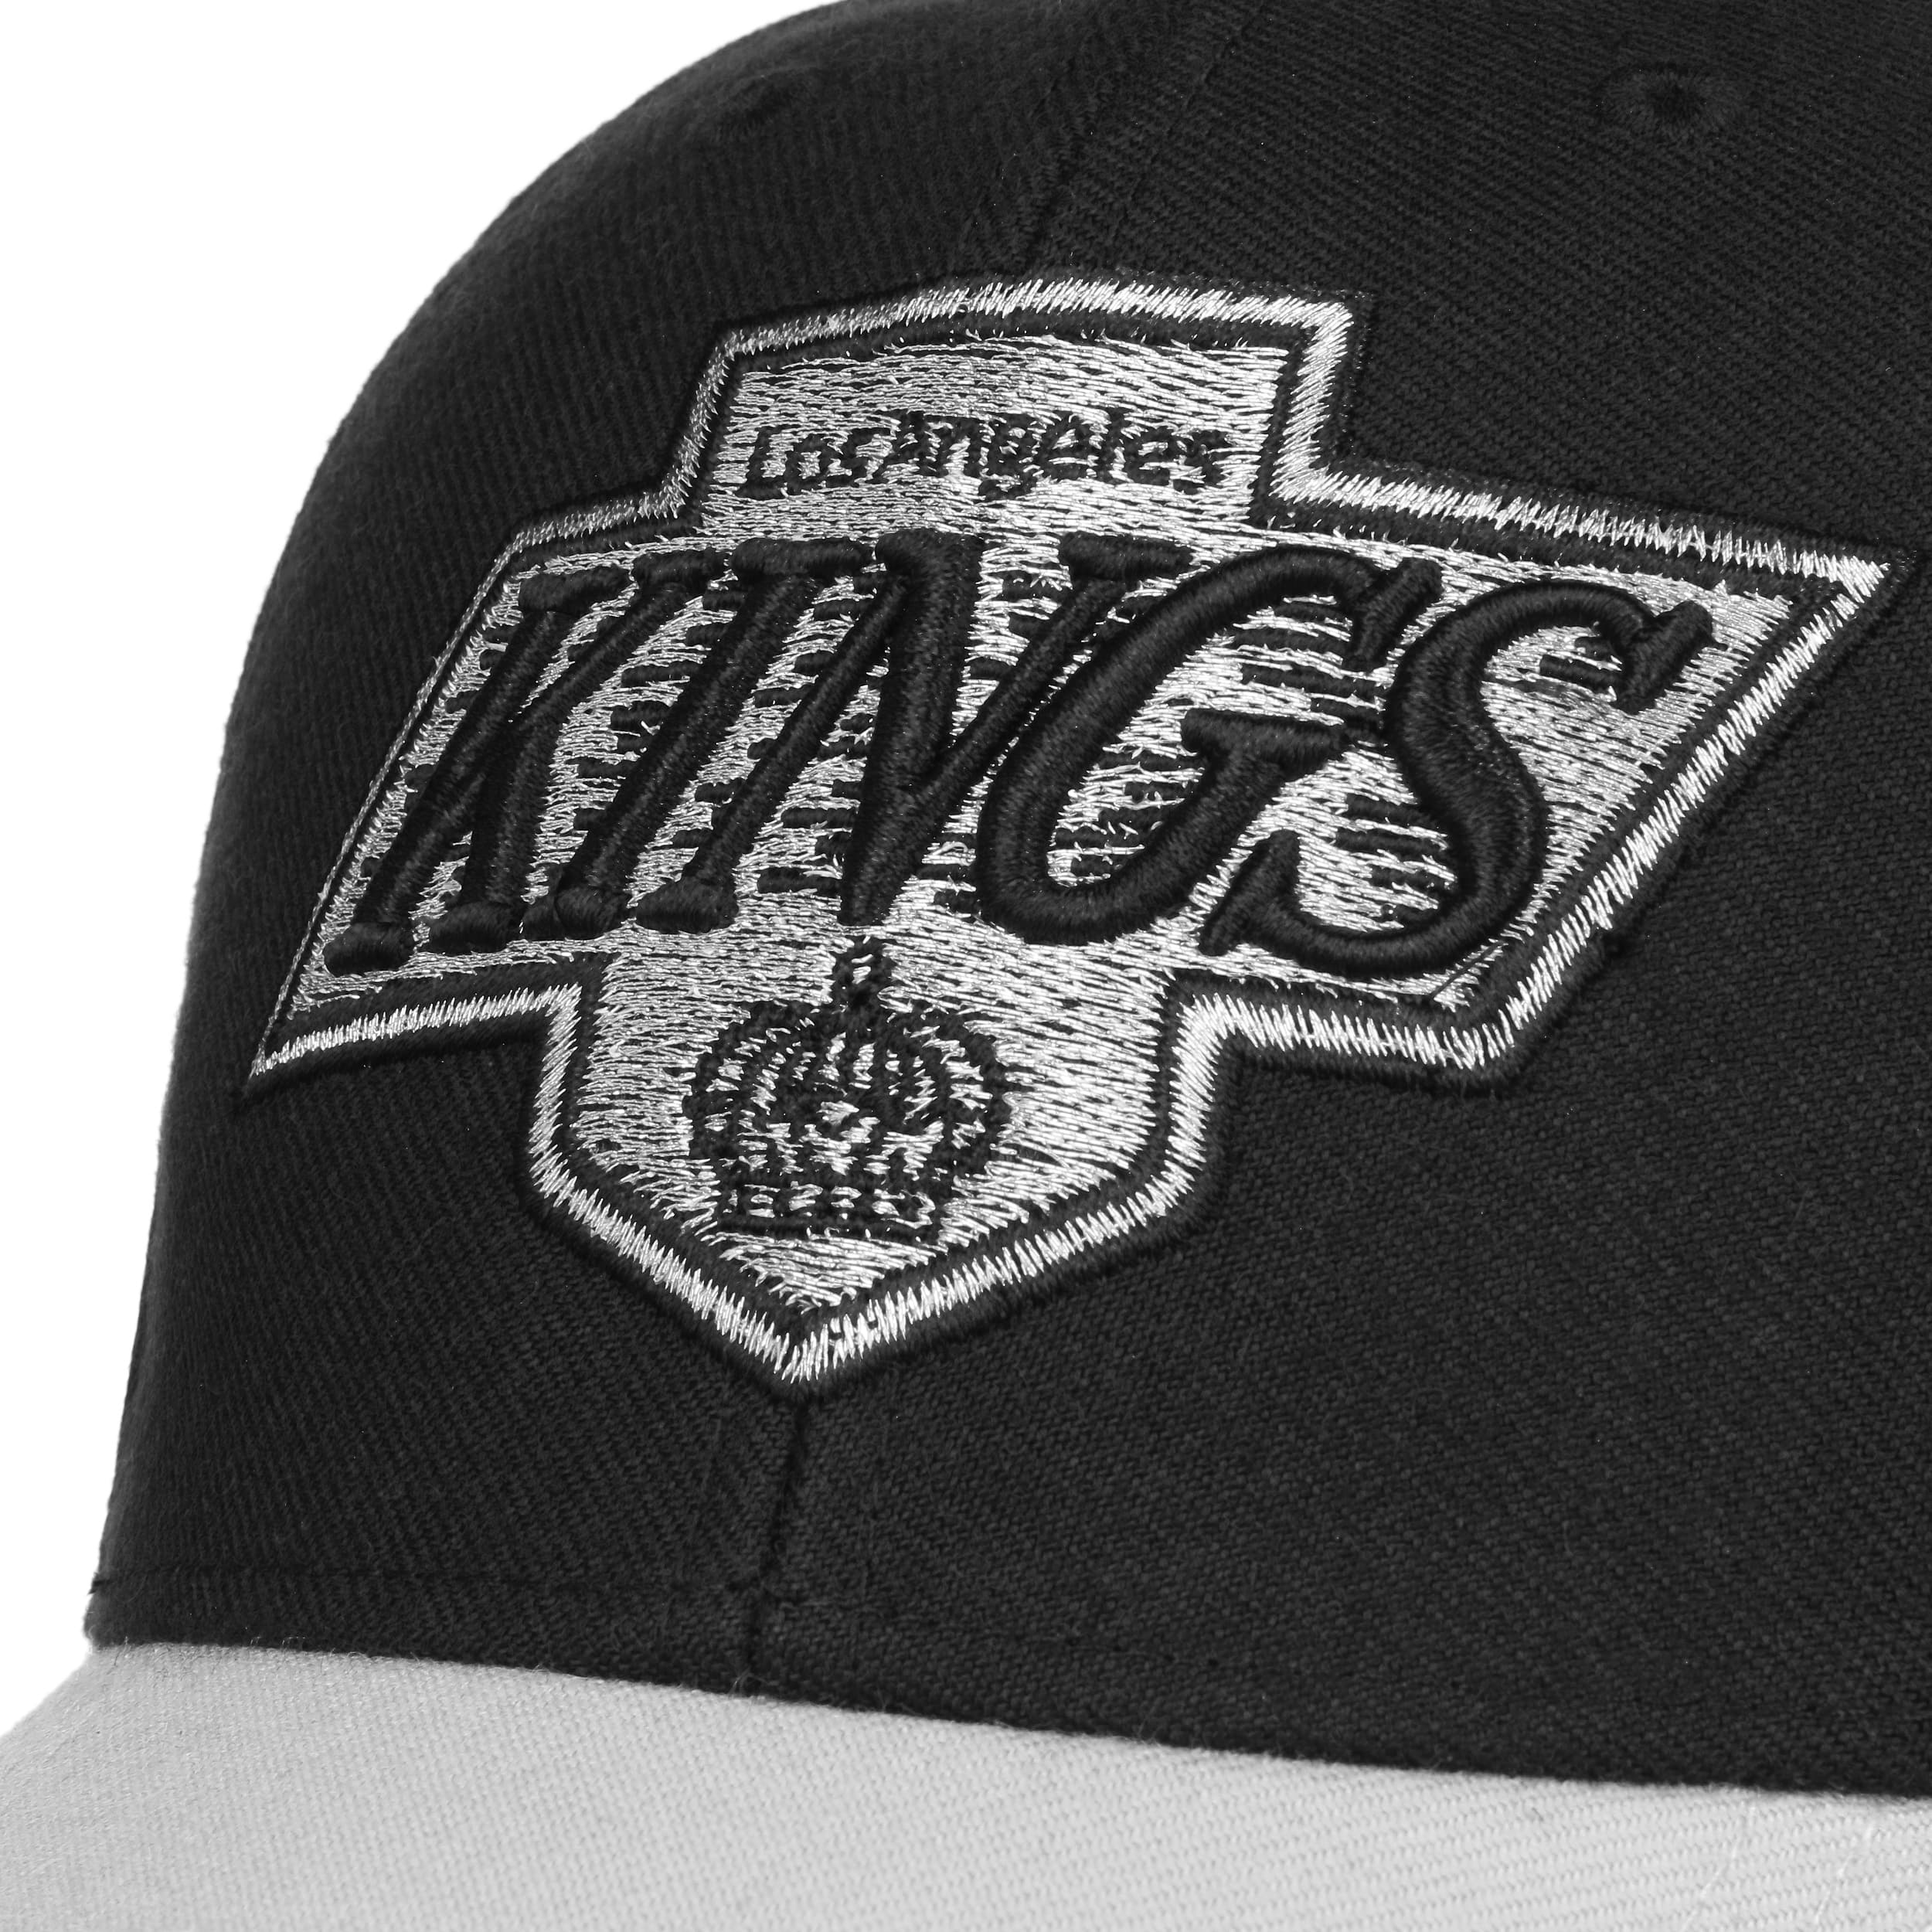 Los Angeles Kings Hats